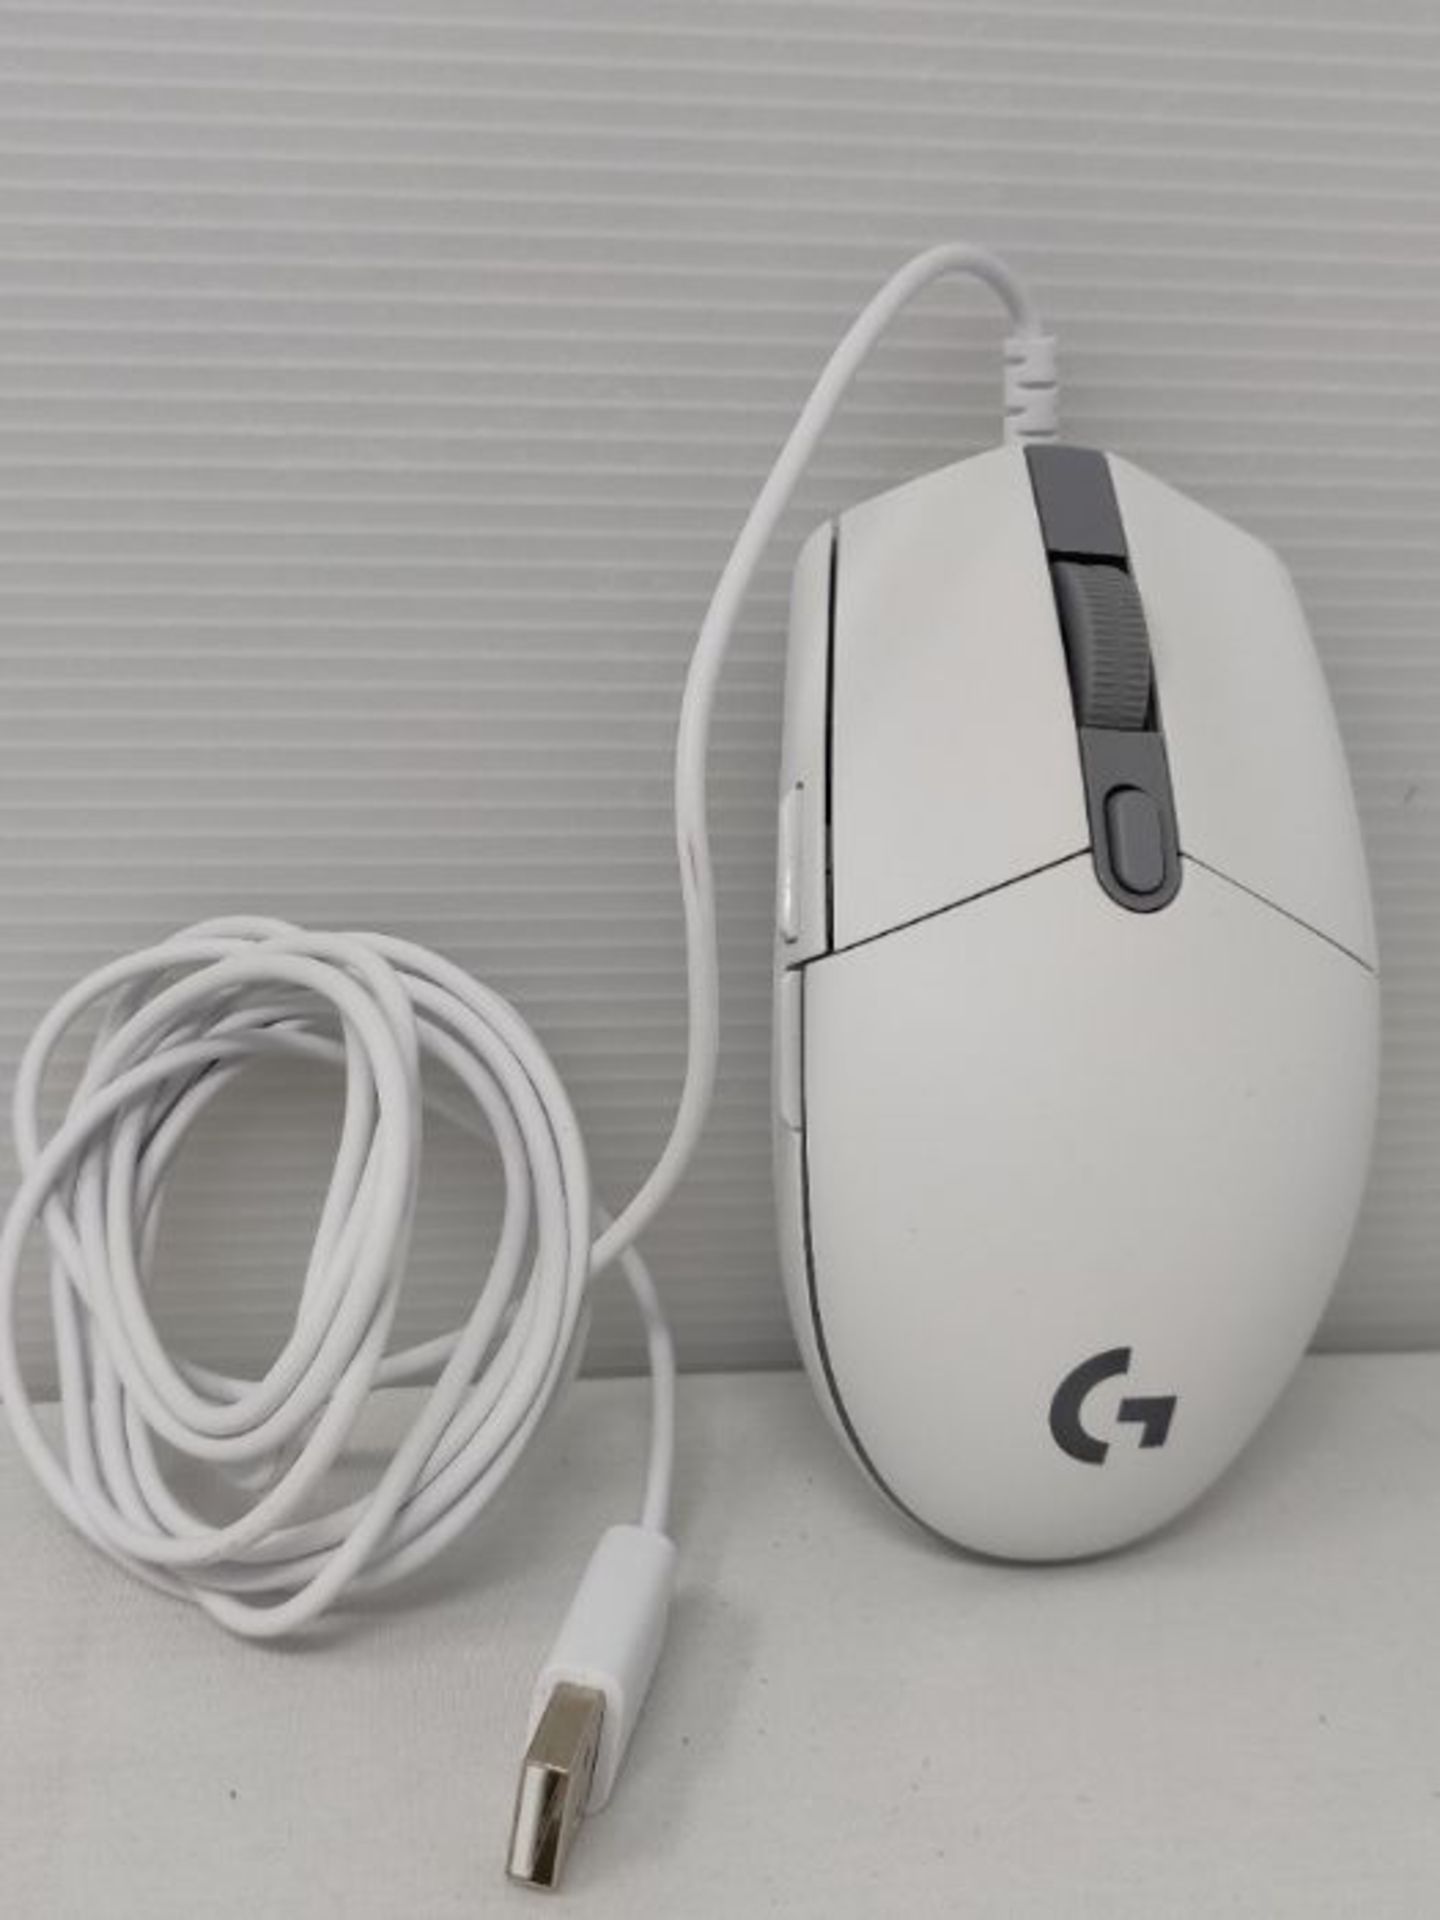 Logitech G203 LIGHTSYNC Gaming Mouse with Customizable RGB Lighting, 6 Programmable Bu - Image 3 of 3